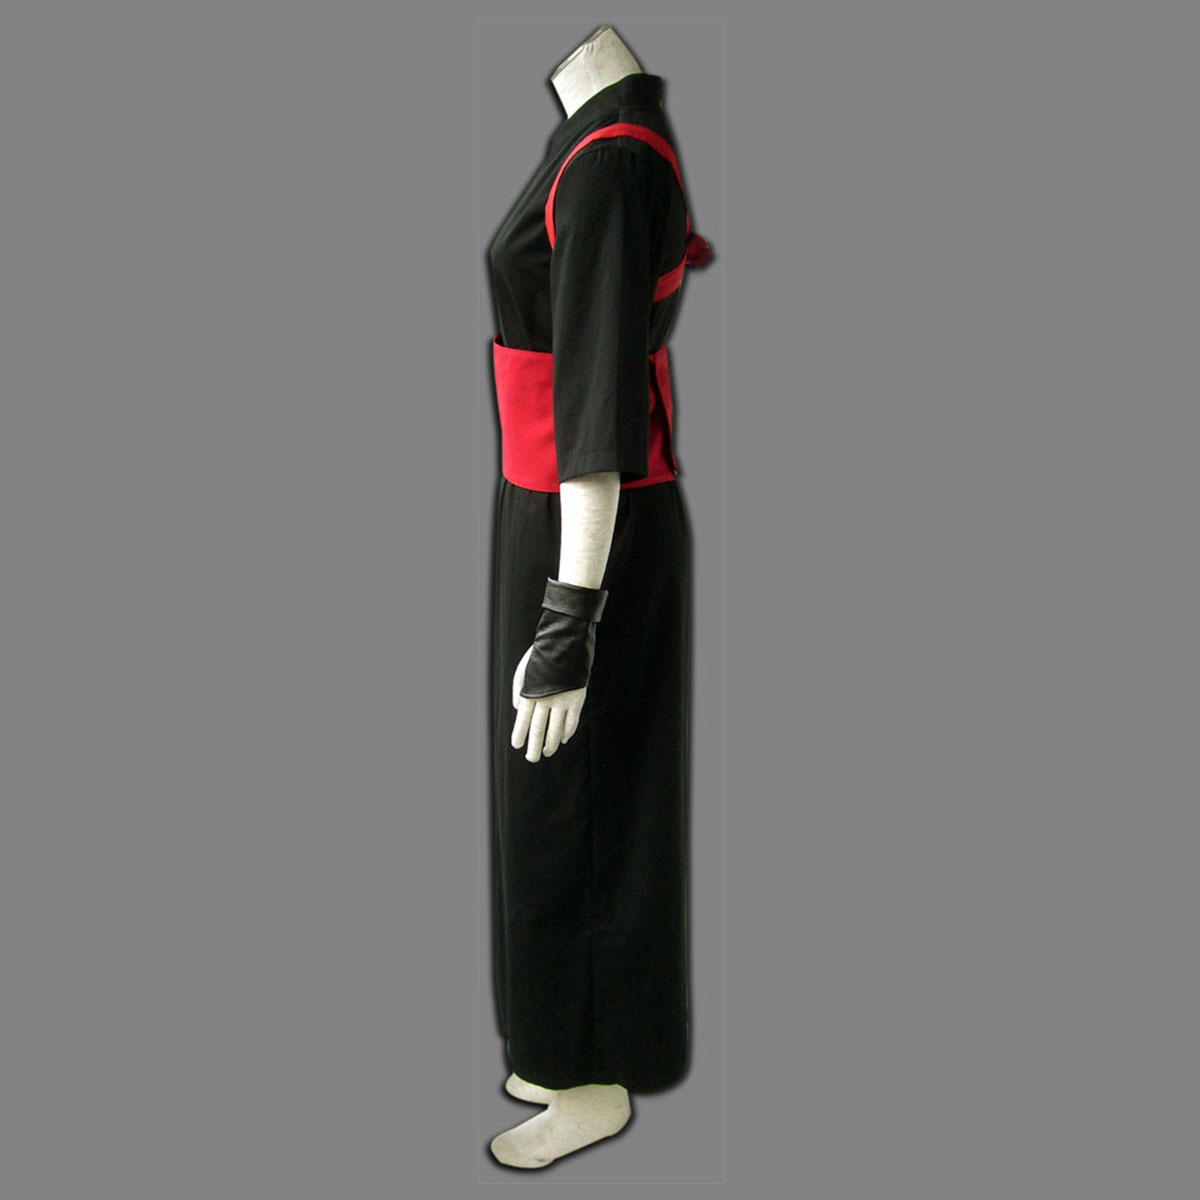 Naruto Shippuden Temari 3 Anime Cosplay Costumes Outfit